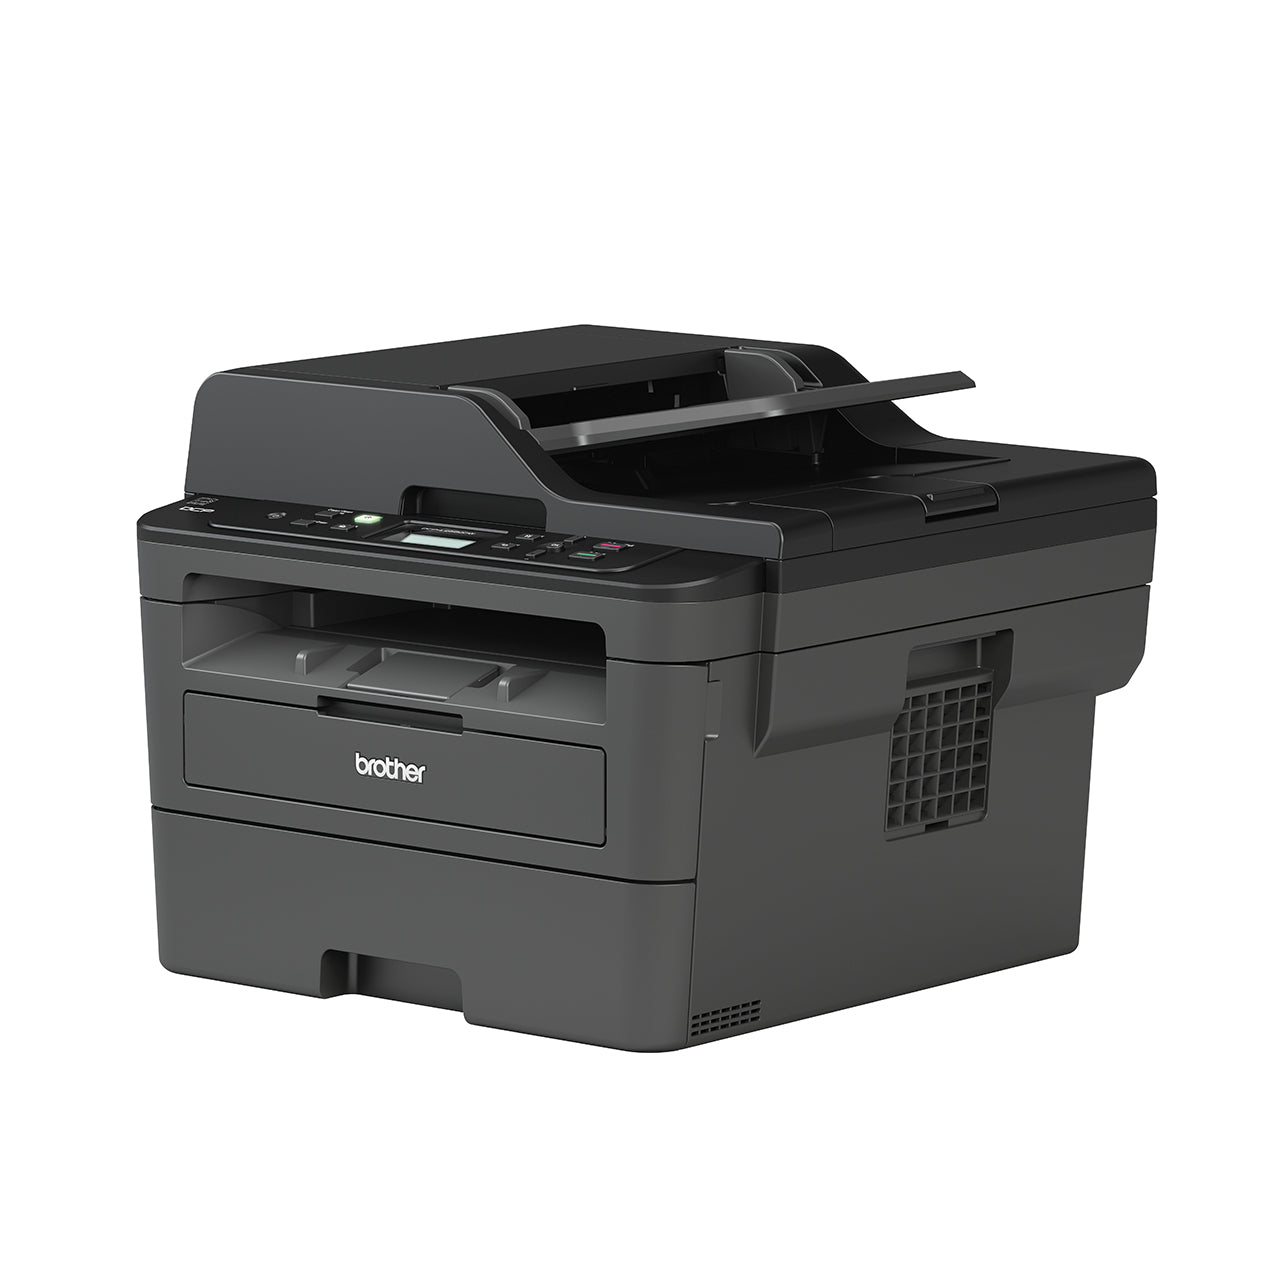 Brother DCP-L2550DW Laser Printer (DCP-L2550DW)